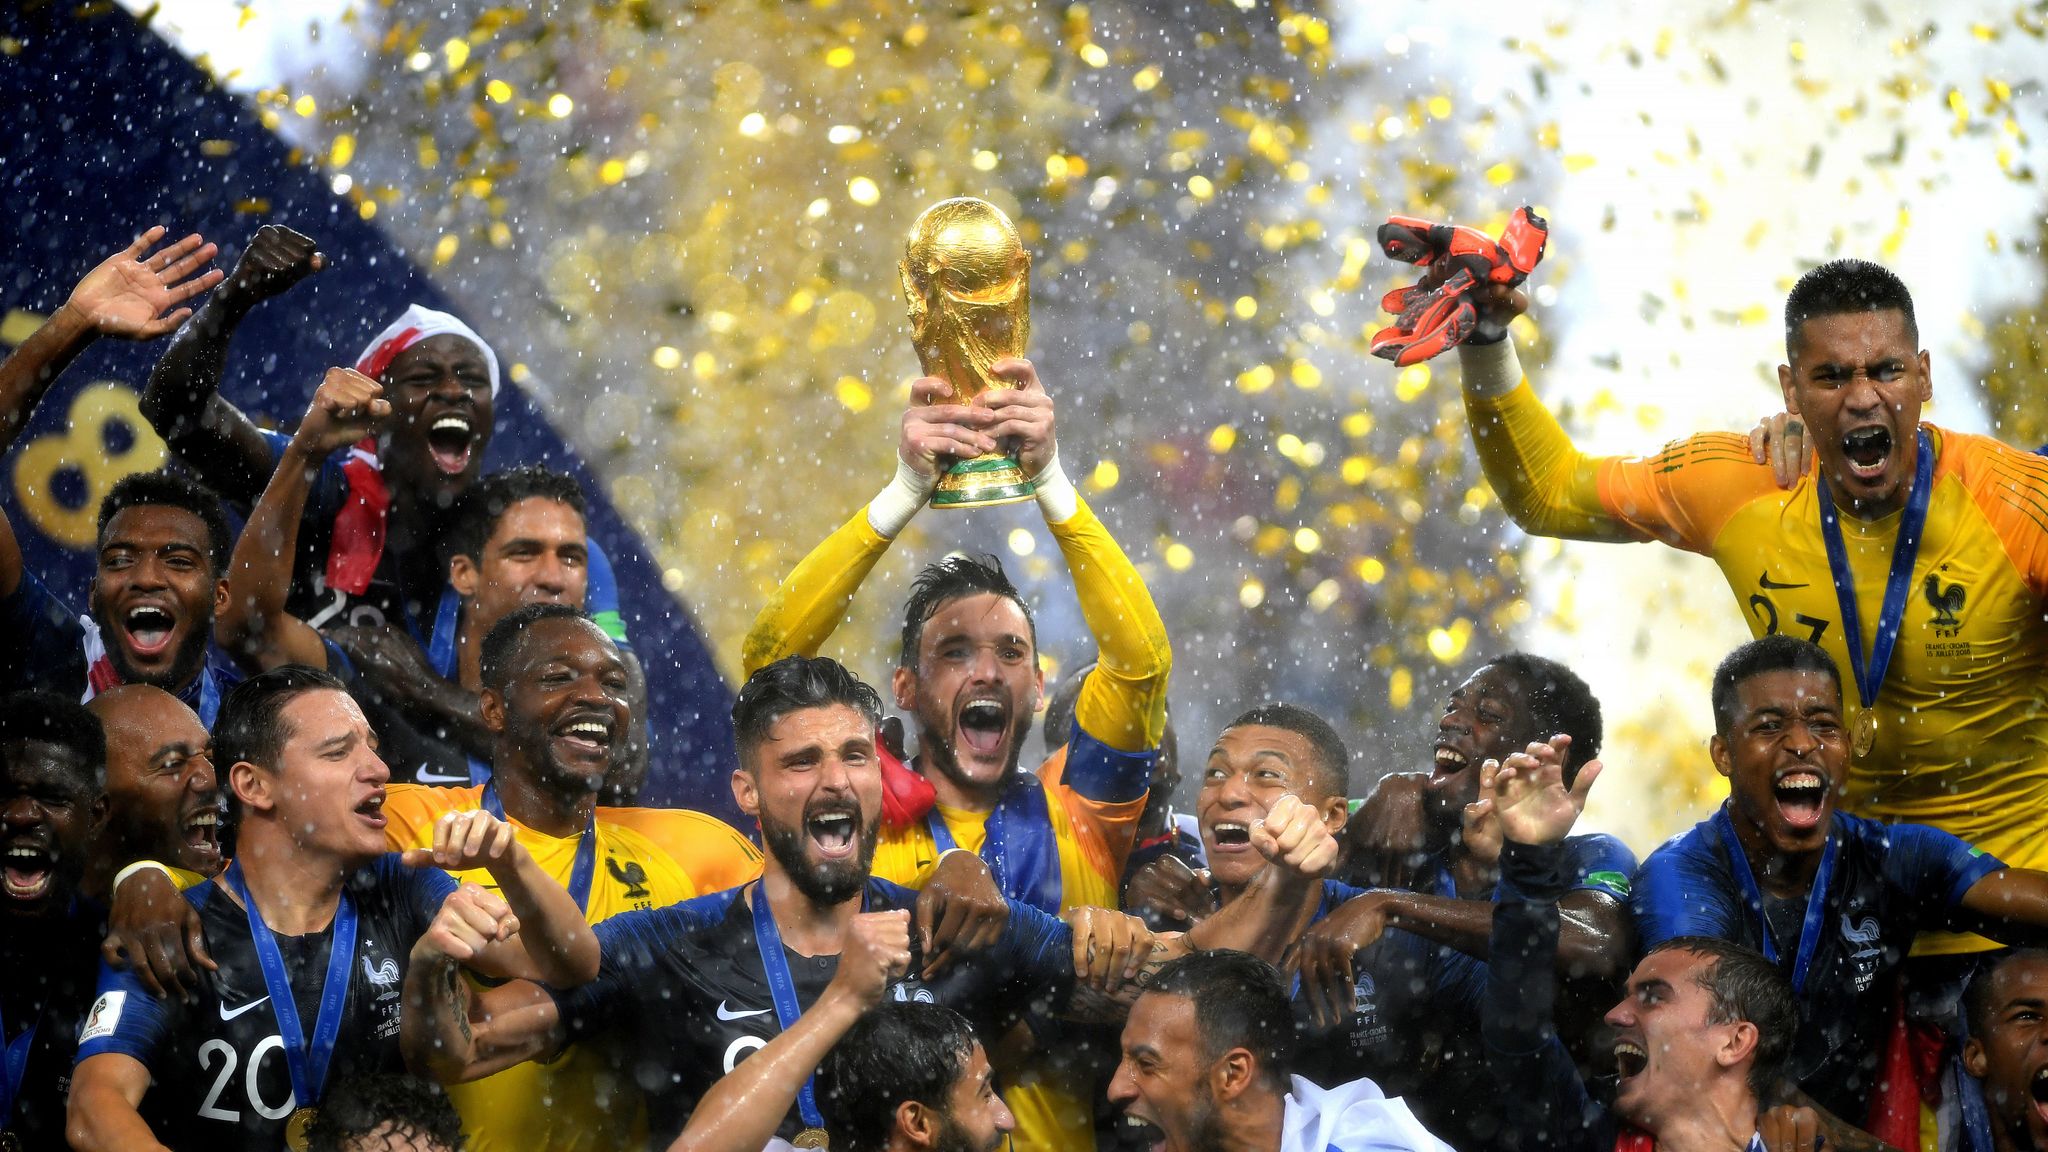 433 - 2018 WORLD CHAMPIONS: FRANCE! 🇫🇷